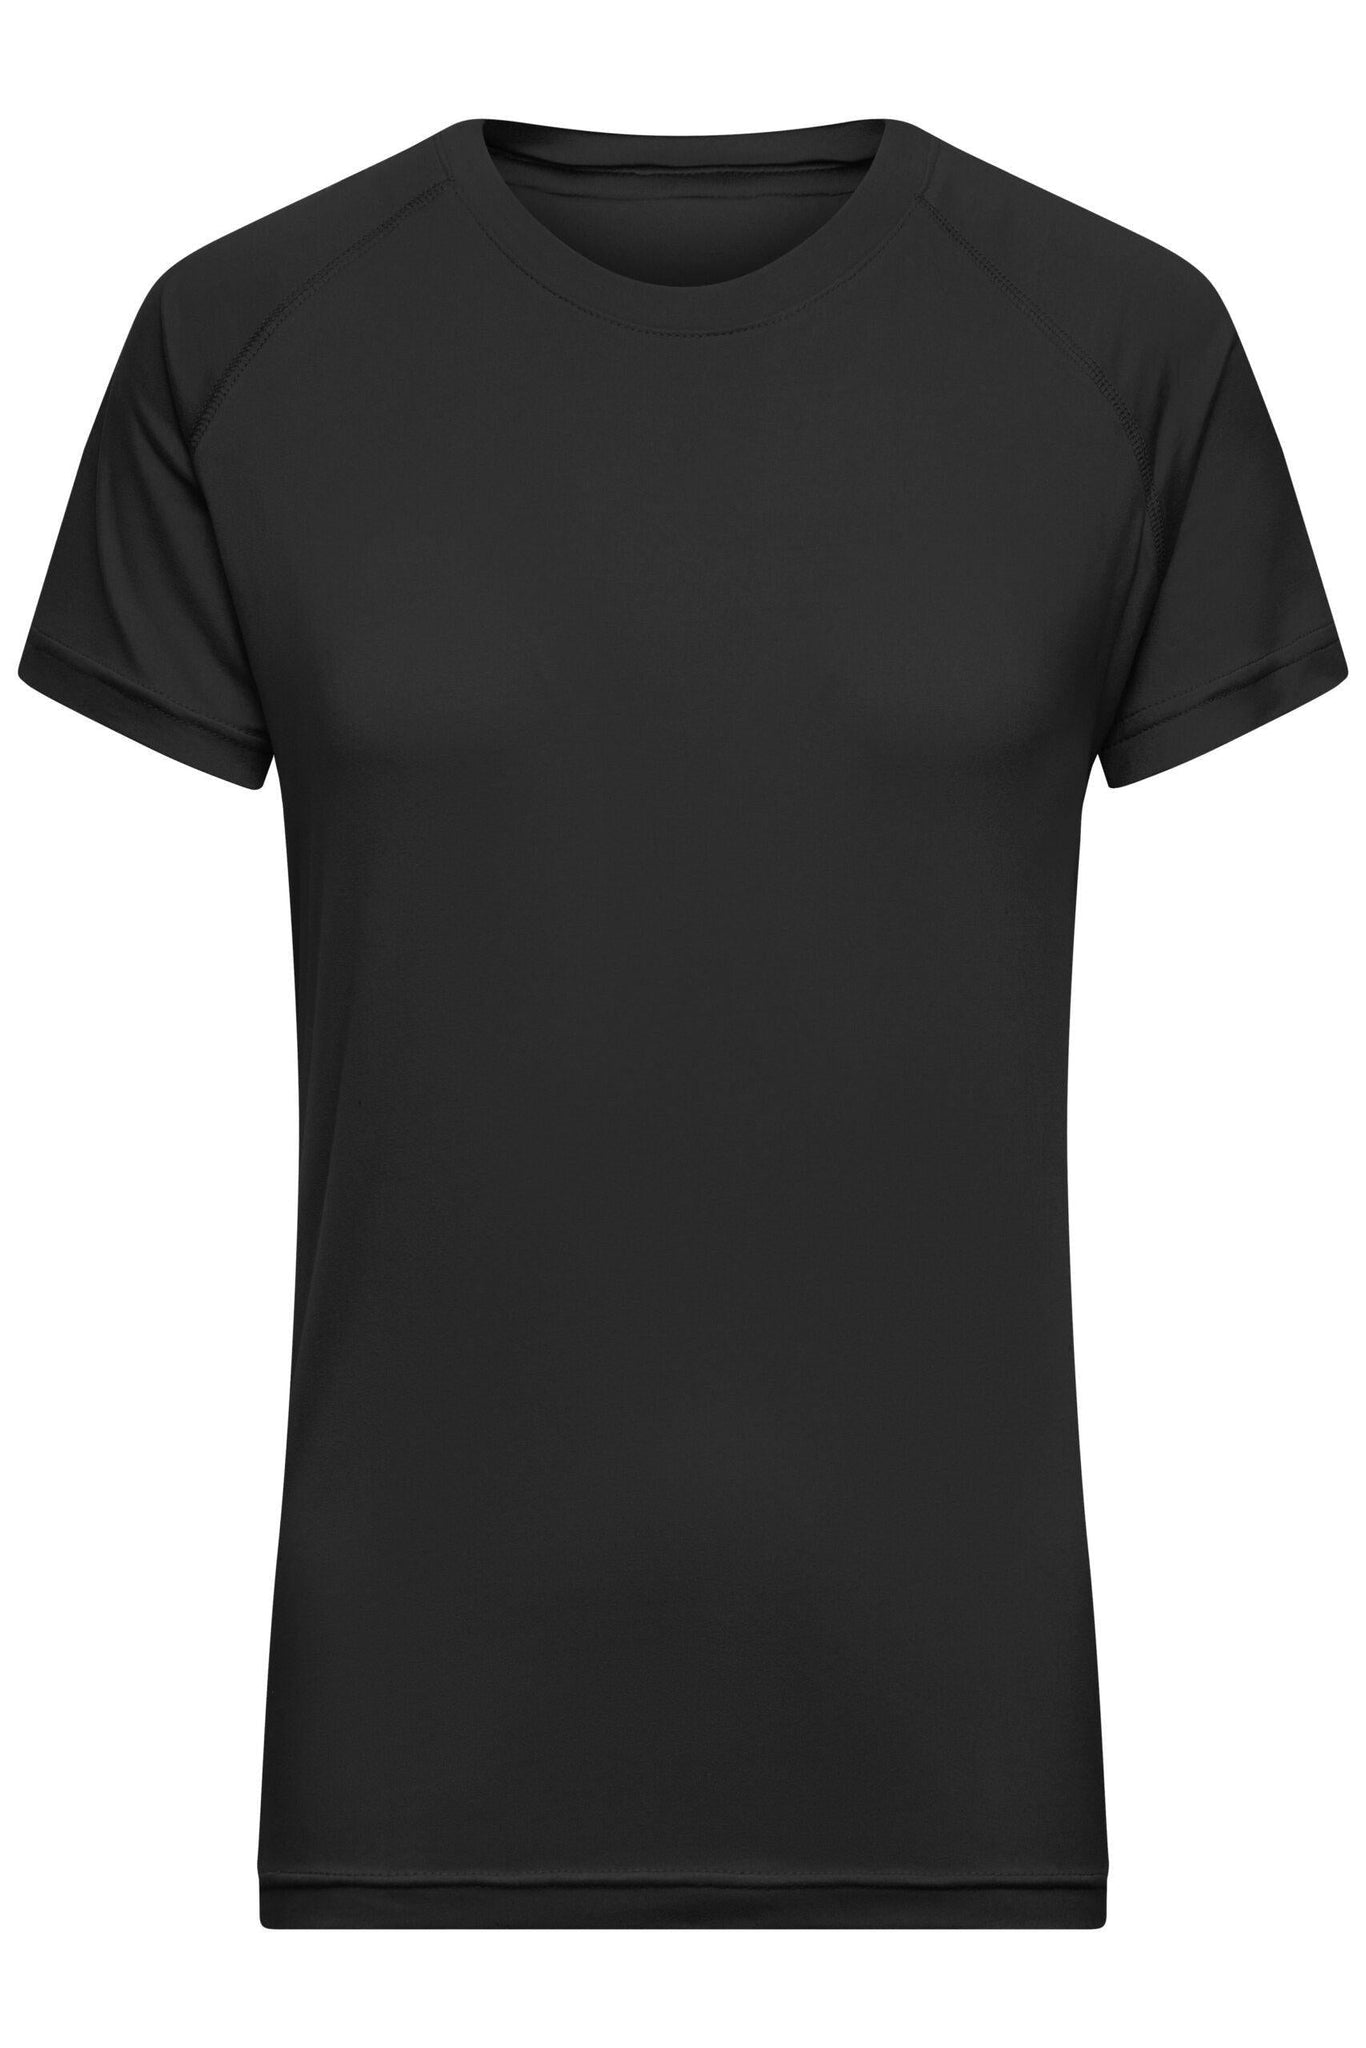 DAME FITNESS T-SHIRT - Fitness T-Shirt - JA Profil 